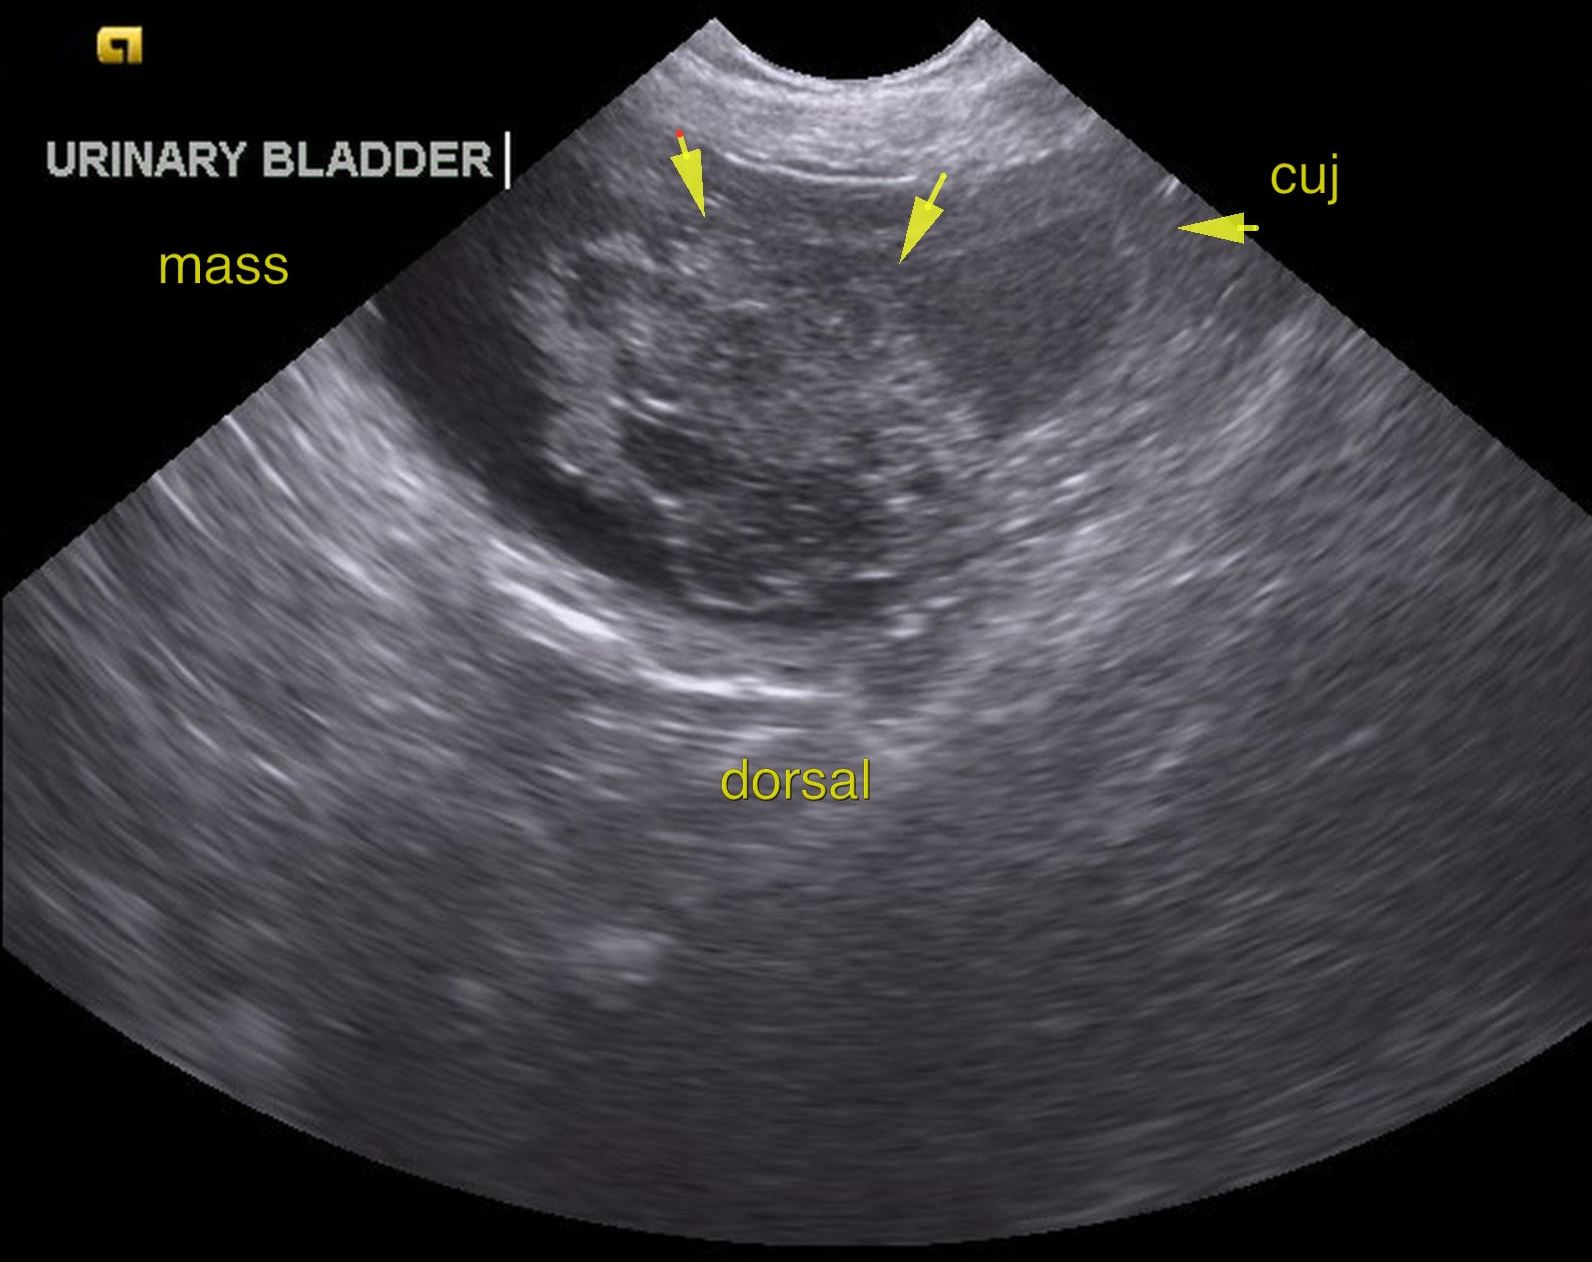 A bladder ultrasound